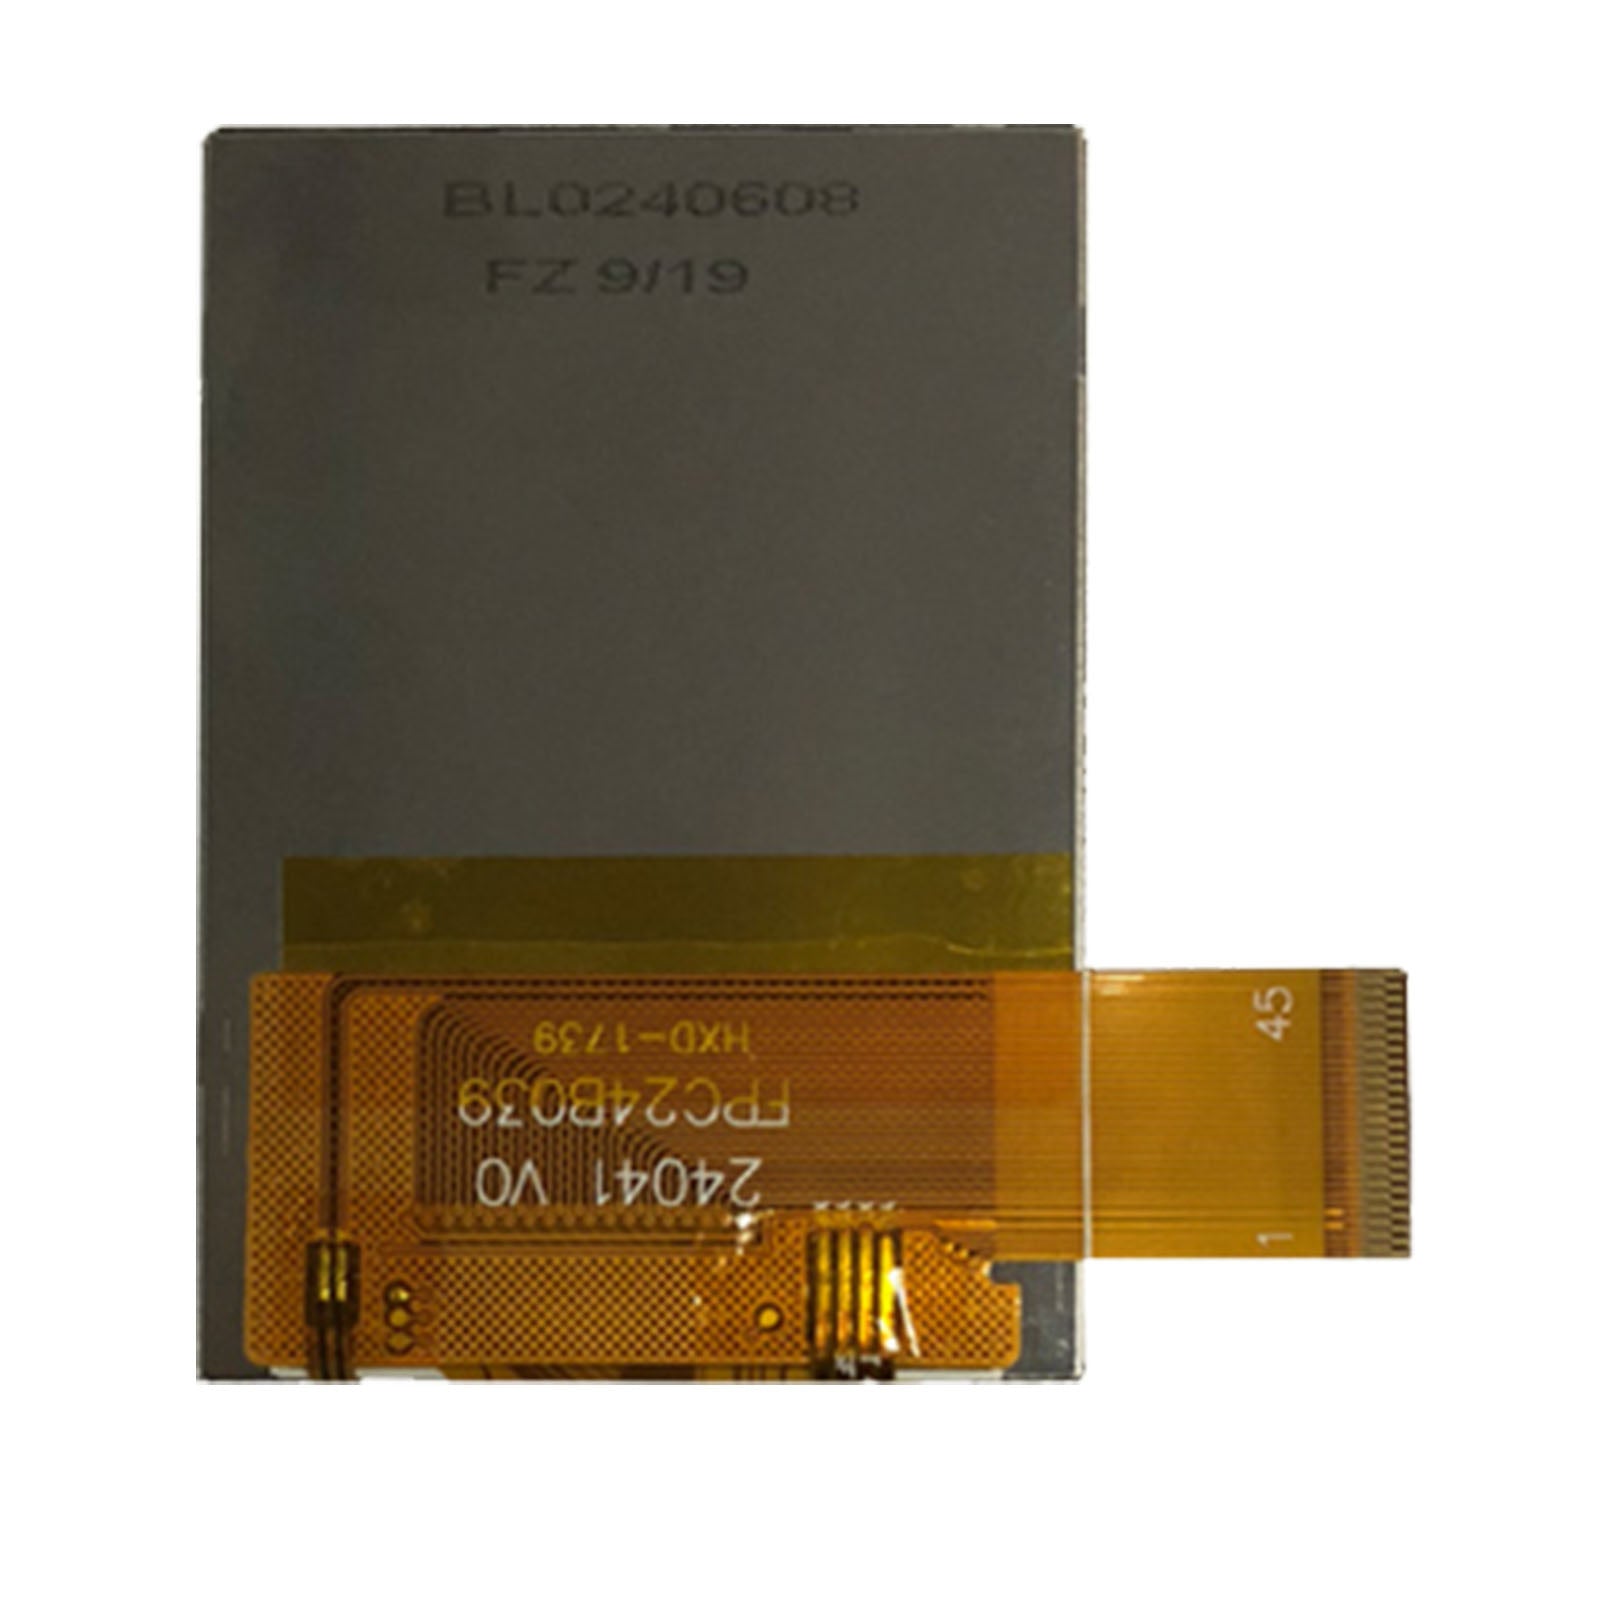 DisplayModule 2.4" 240X320 Transflective Display Panel with Resistive Touch – MCU/SPI/RGB